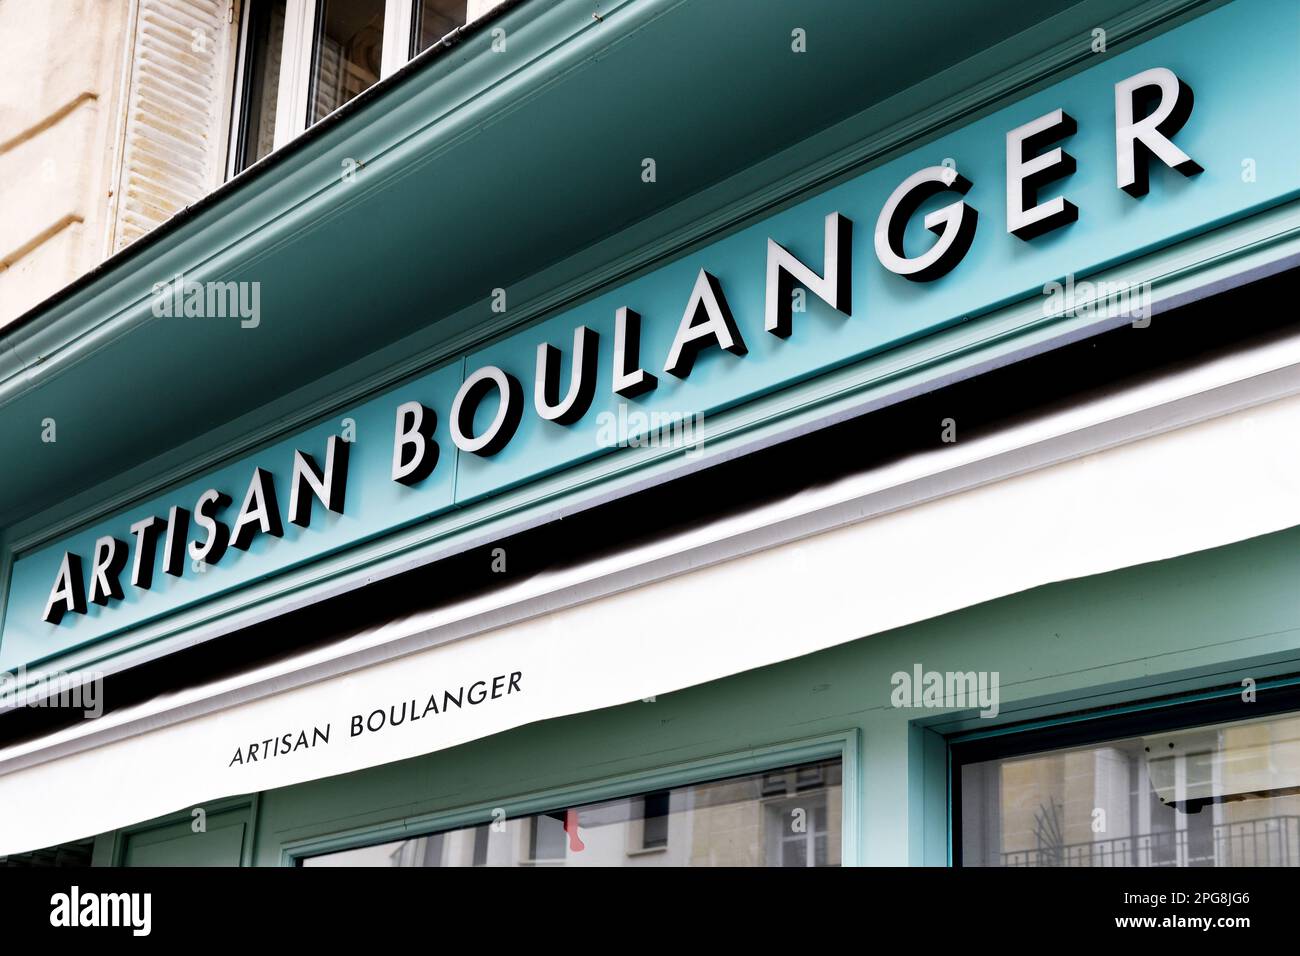 Enseigne Artisan Boulanger - Paris - France Stock Photo - Alamy